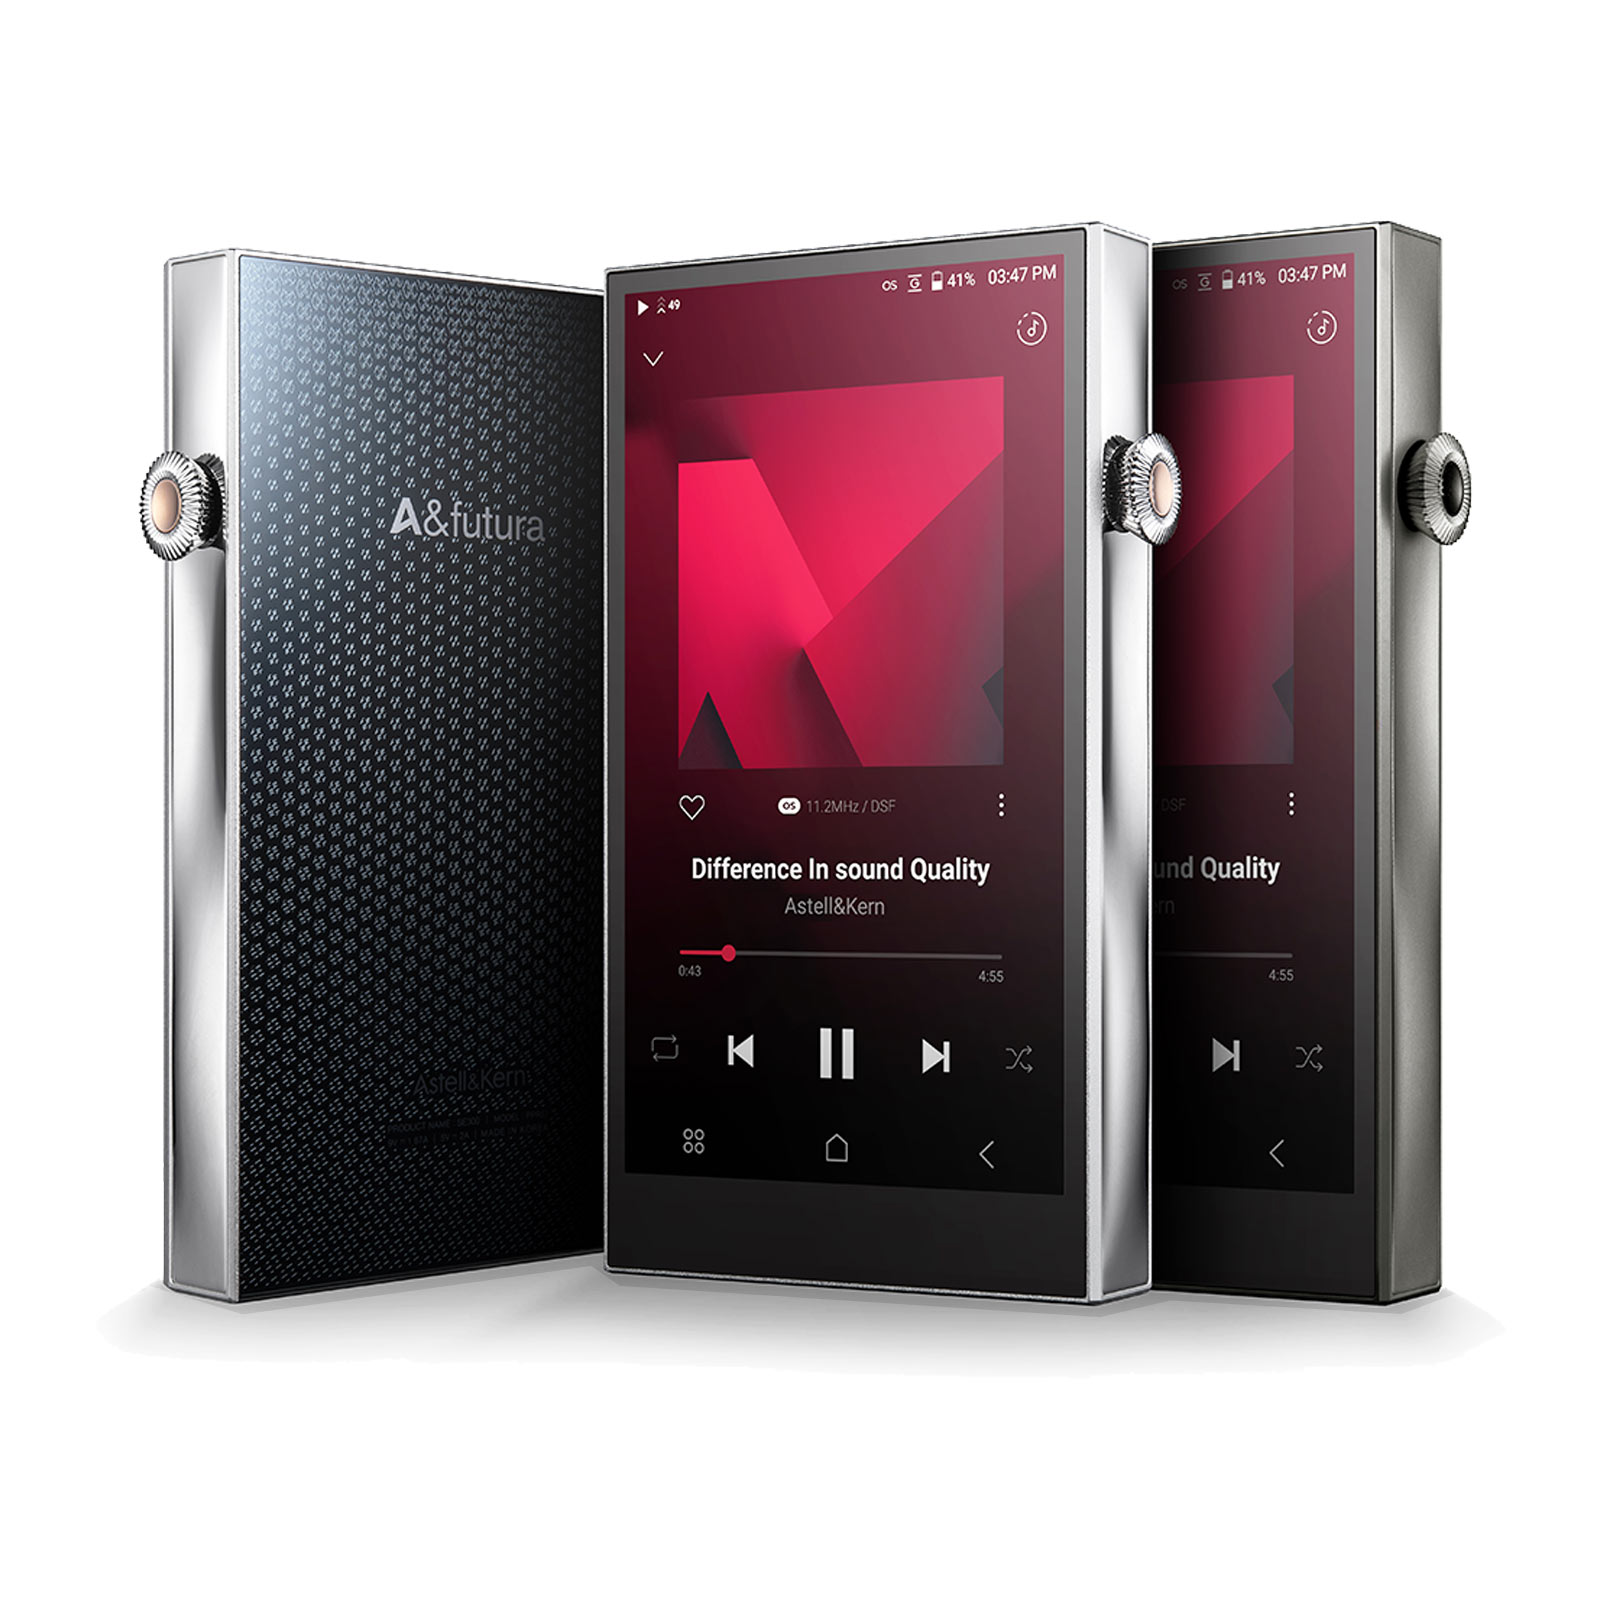 A&futura SE300 Digital Audio Player, by Astell&Kern | Audio Sanctuary